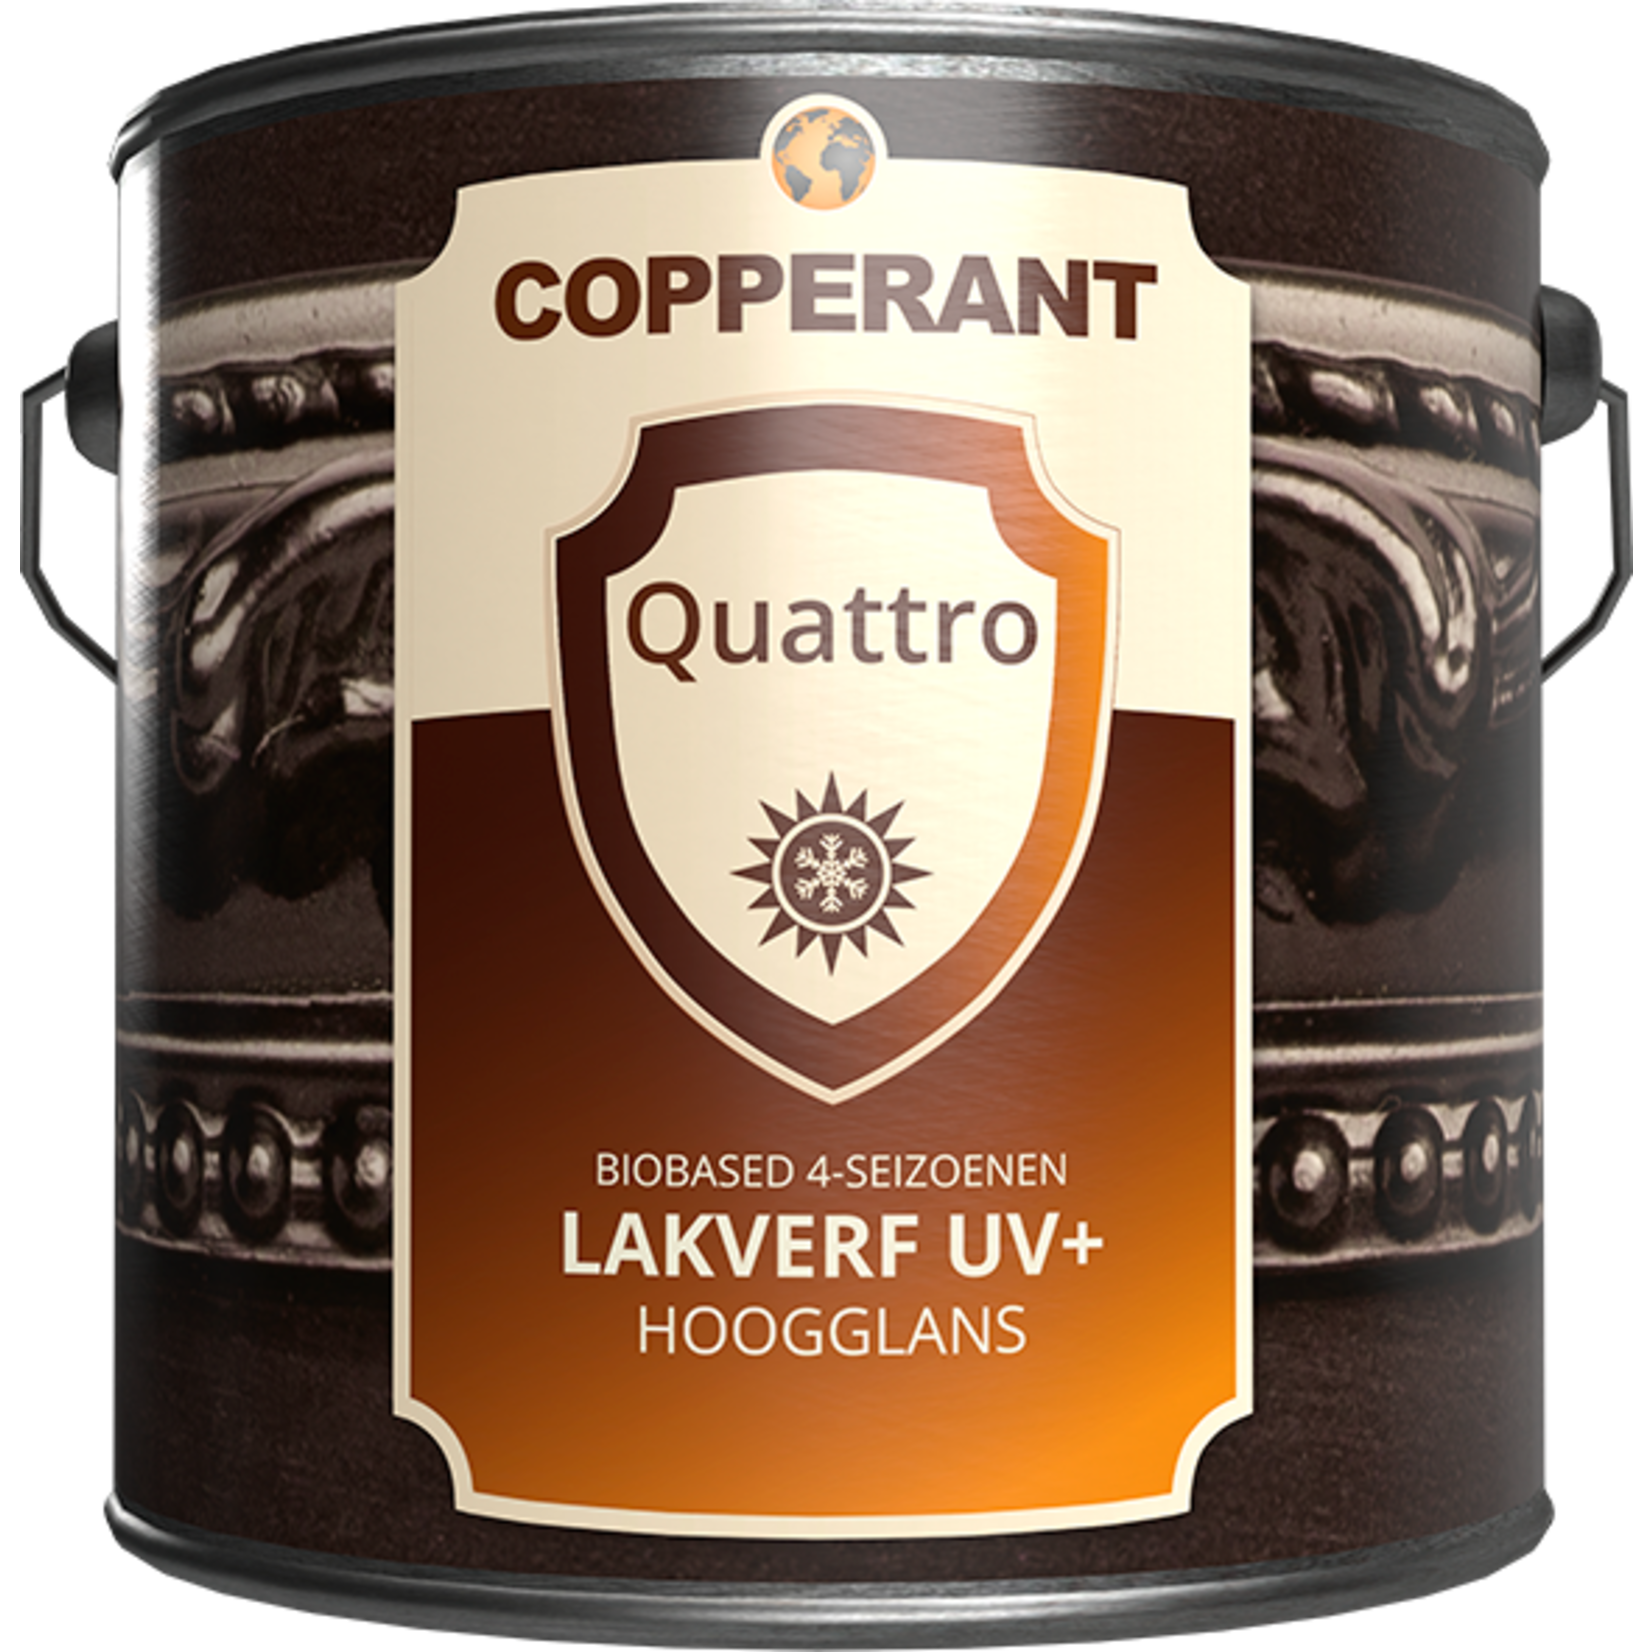 Copperant Quattro lakverf hoogglans UV+